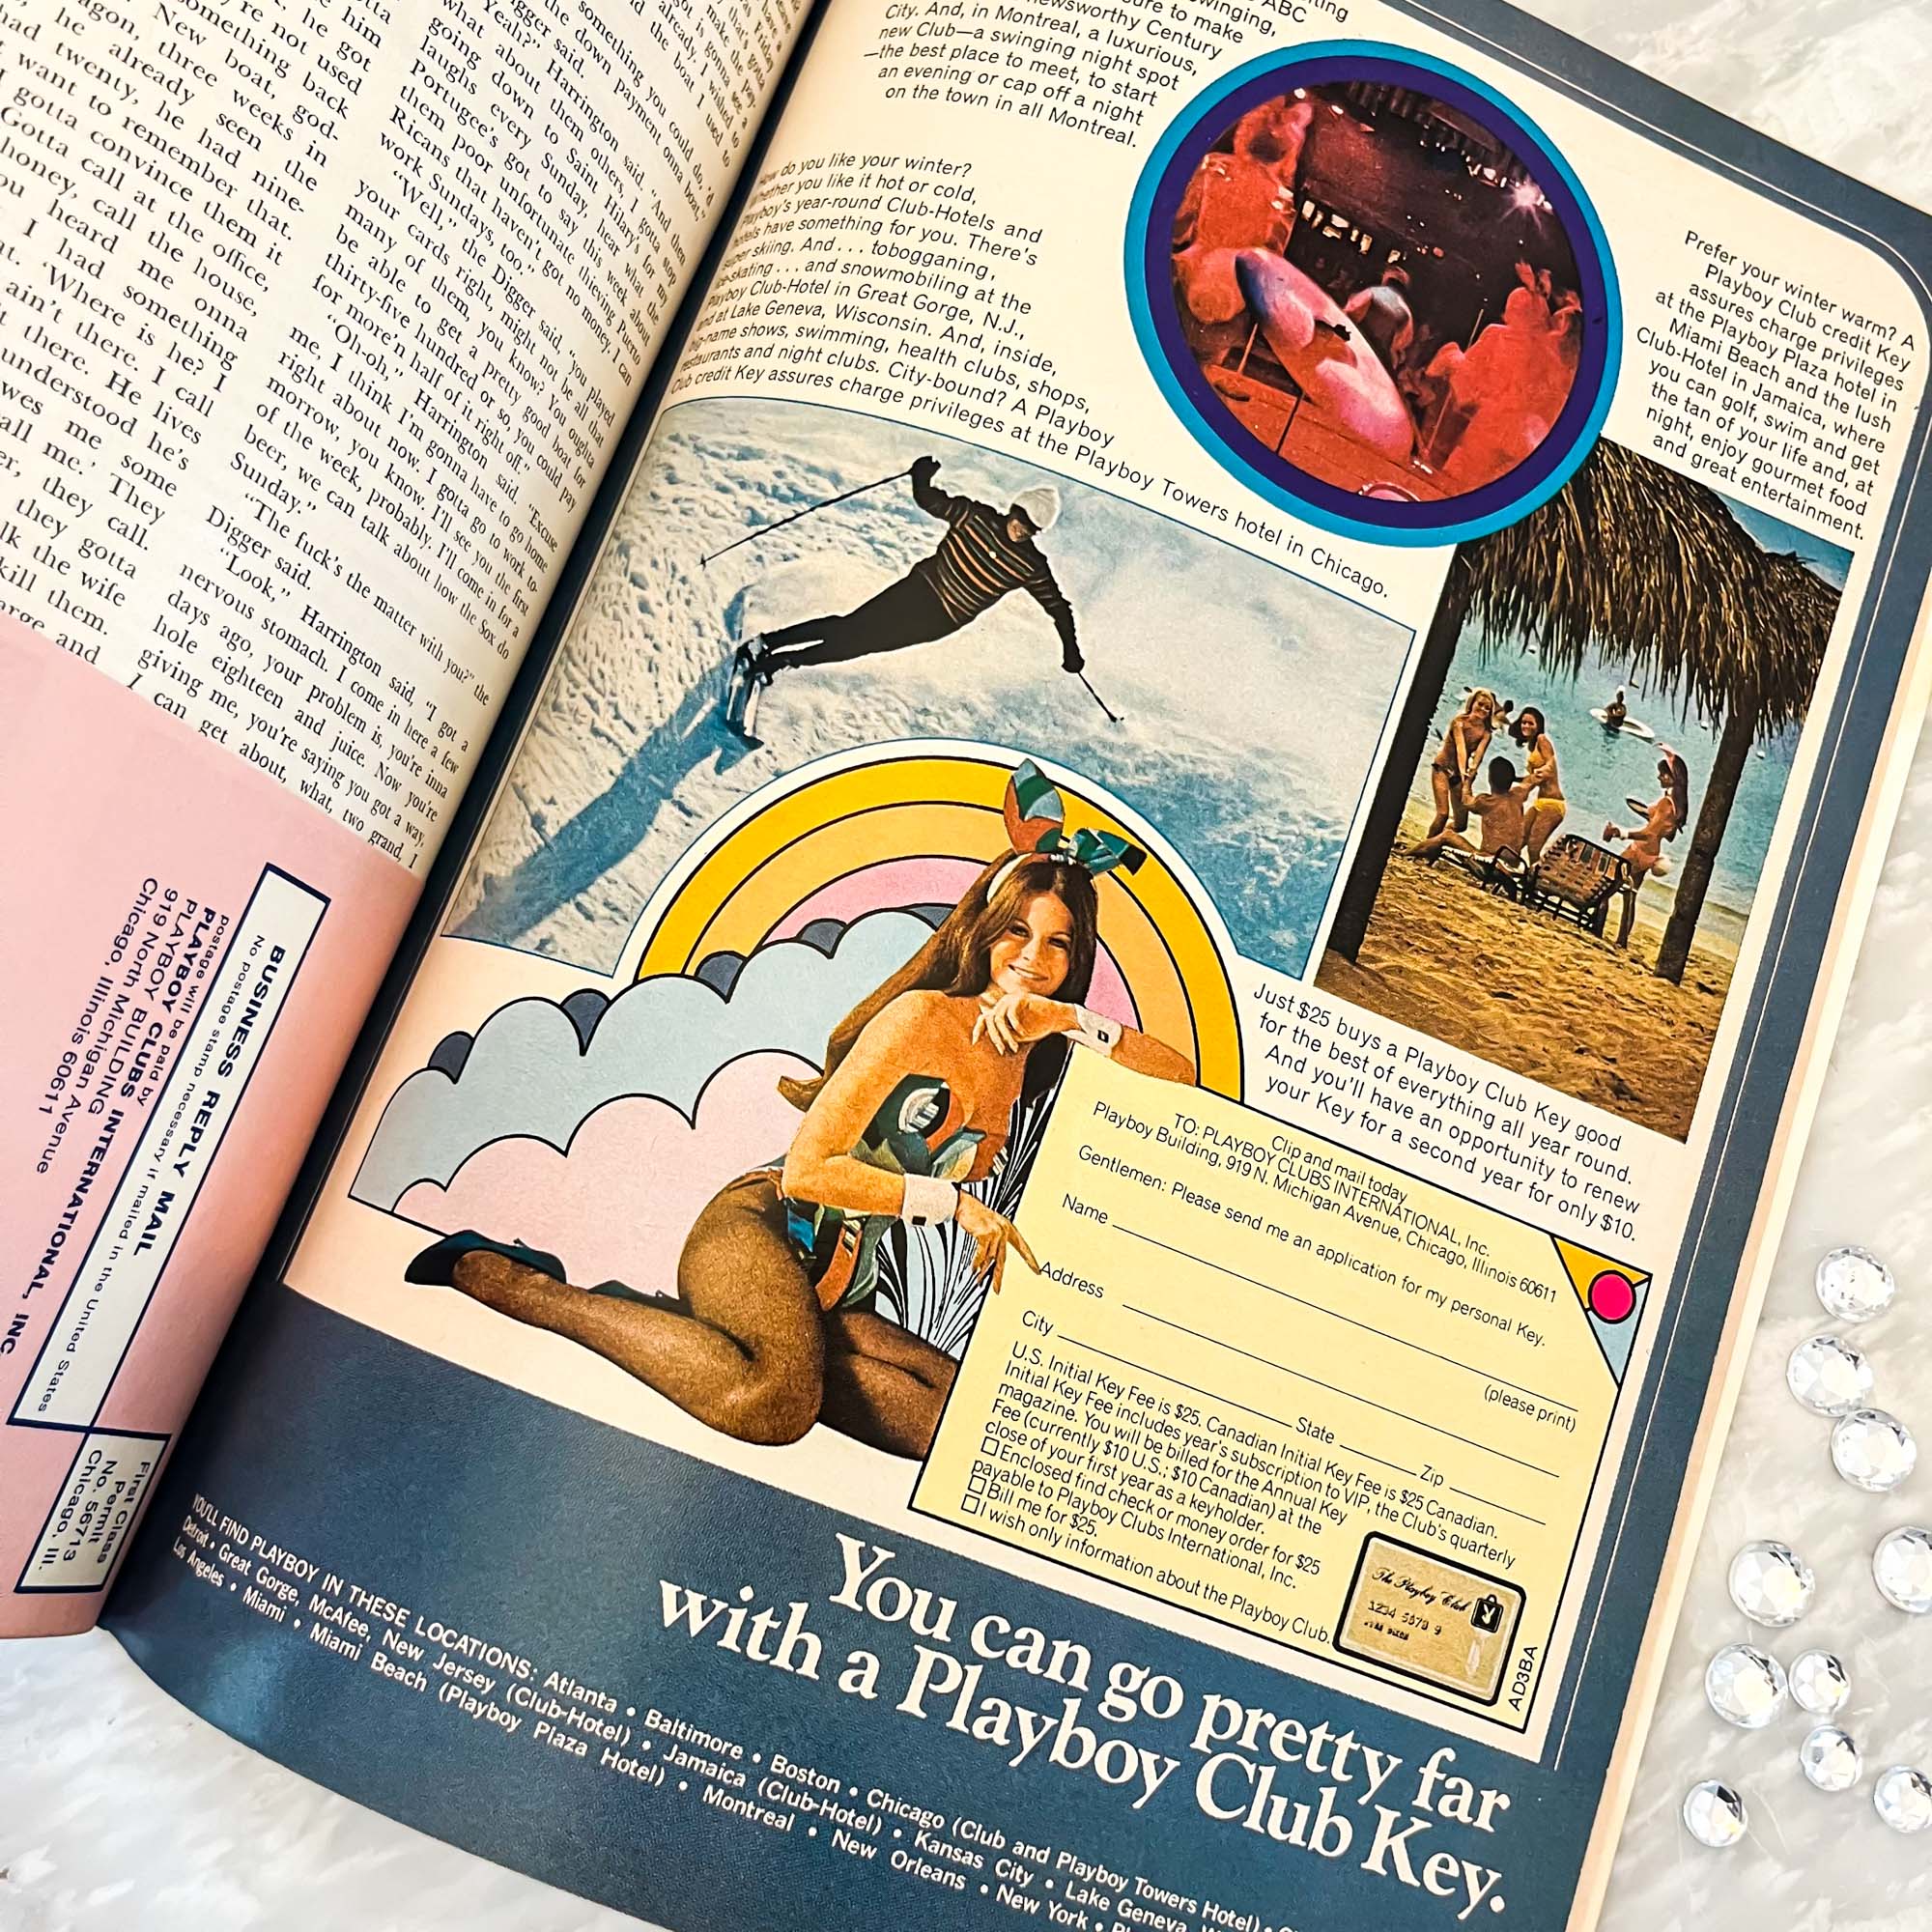 Vintage February 1973 Playboy magazine